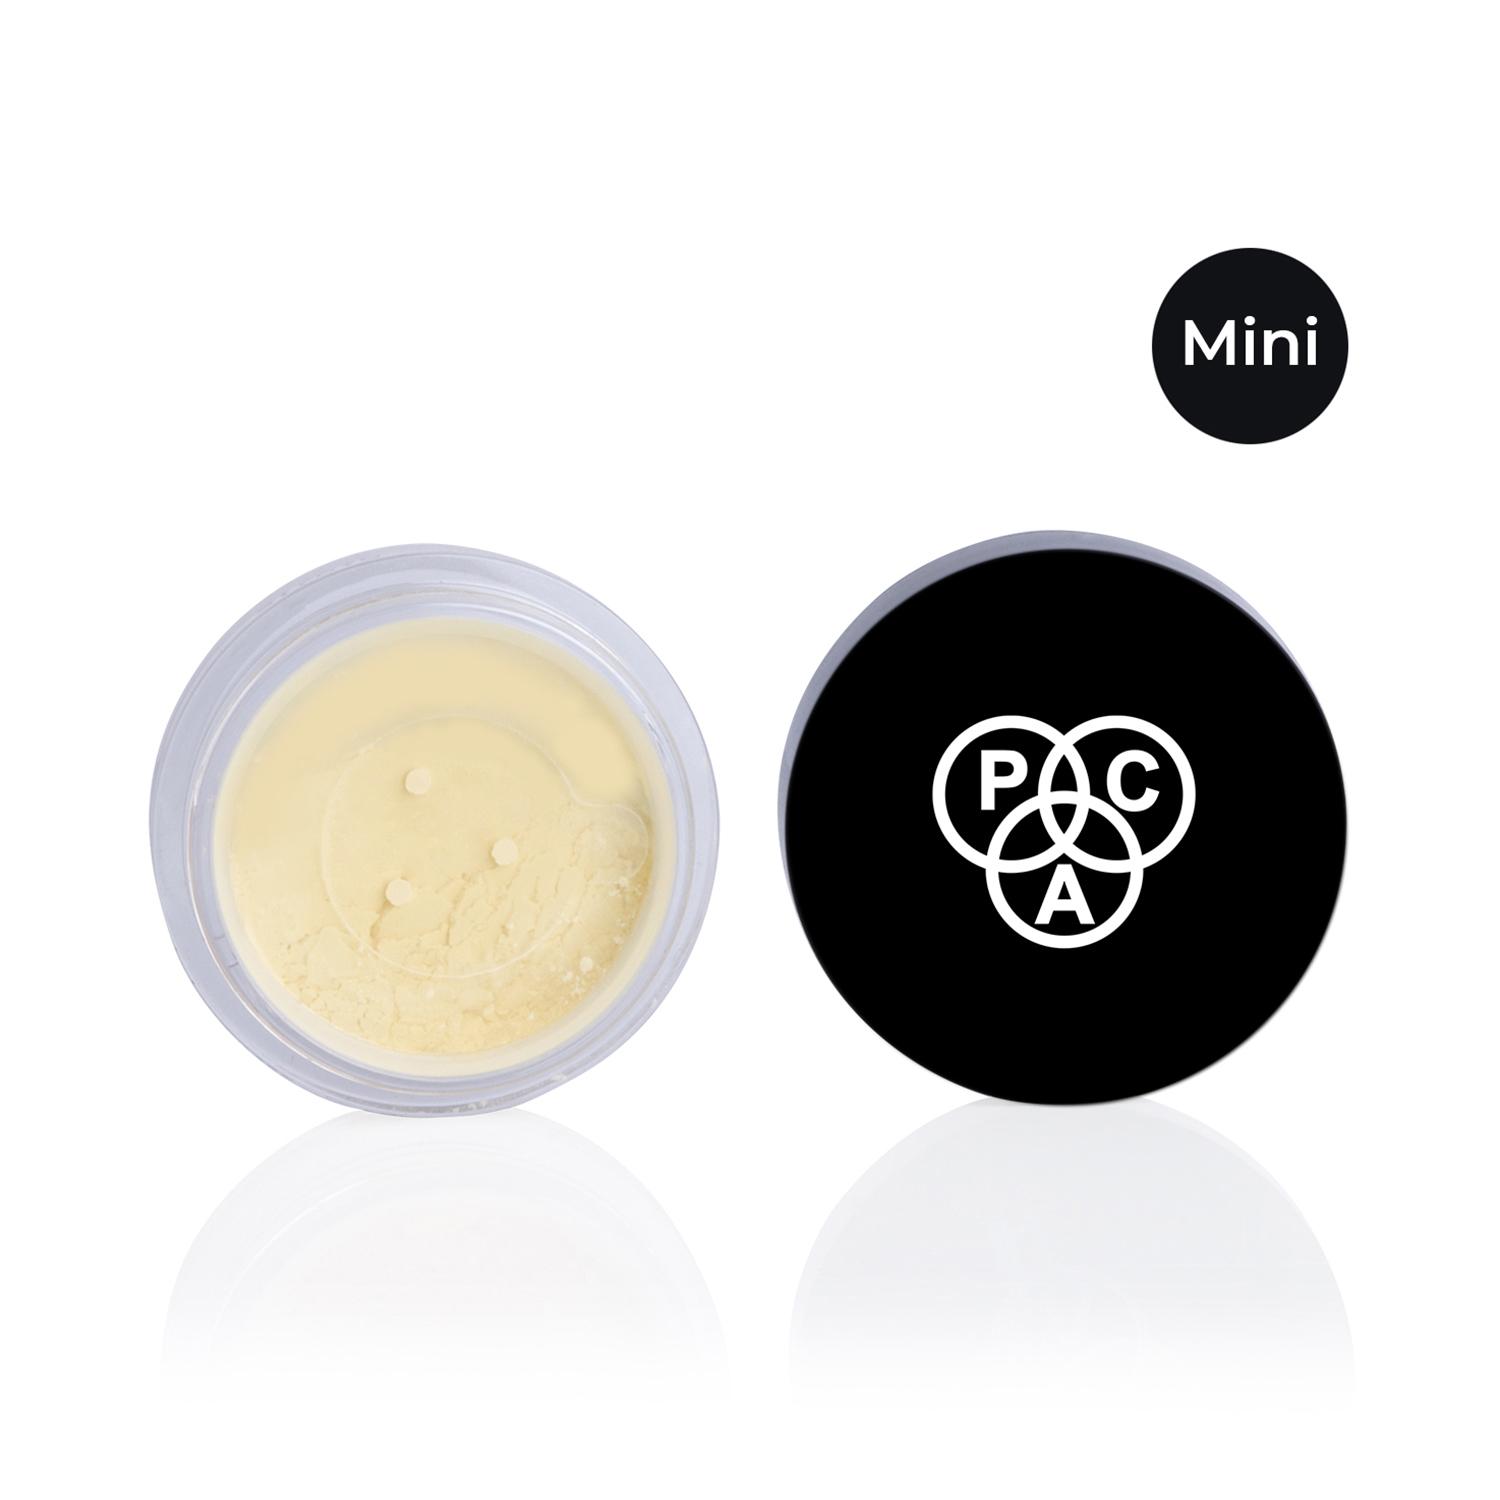 PAC | PAC Translucent Powder Mini - 04 Shade (2g)